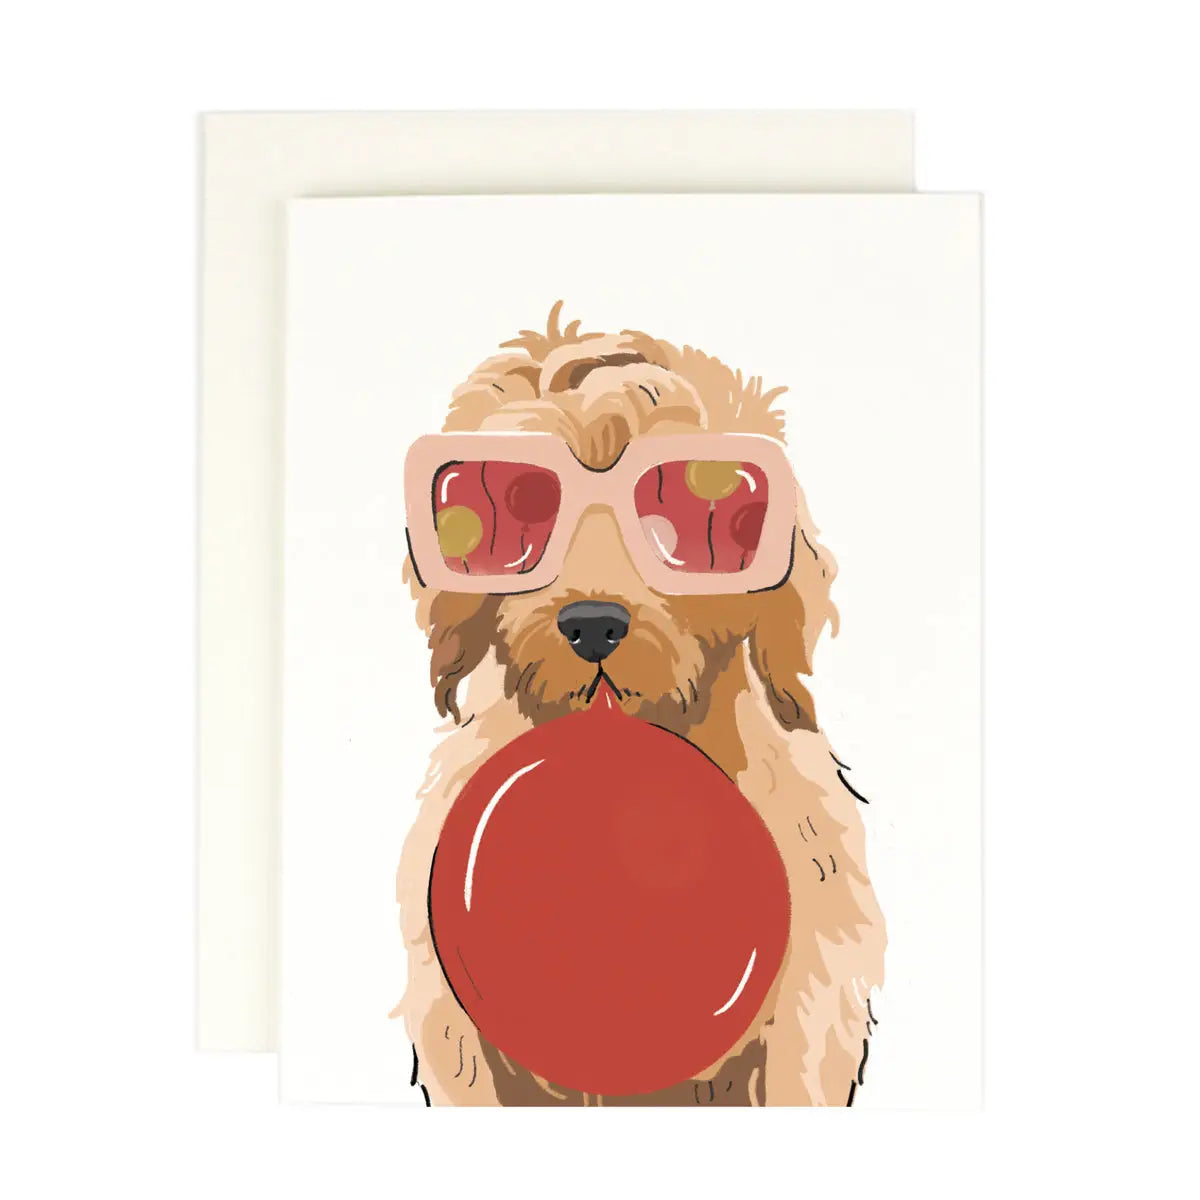 Balloon Dog Greeting Card